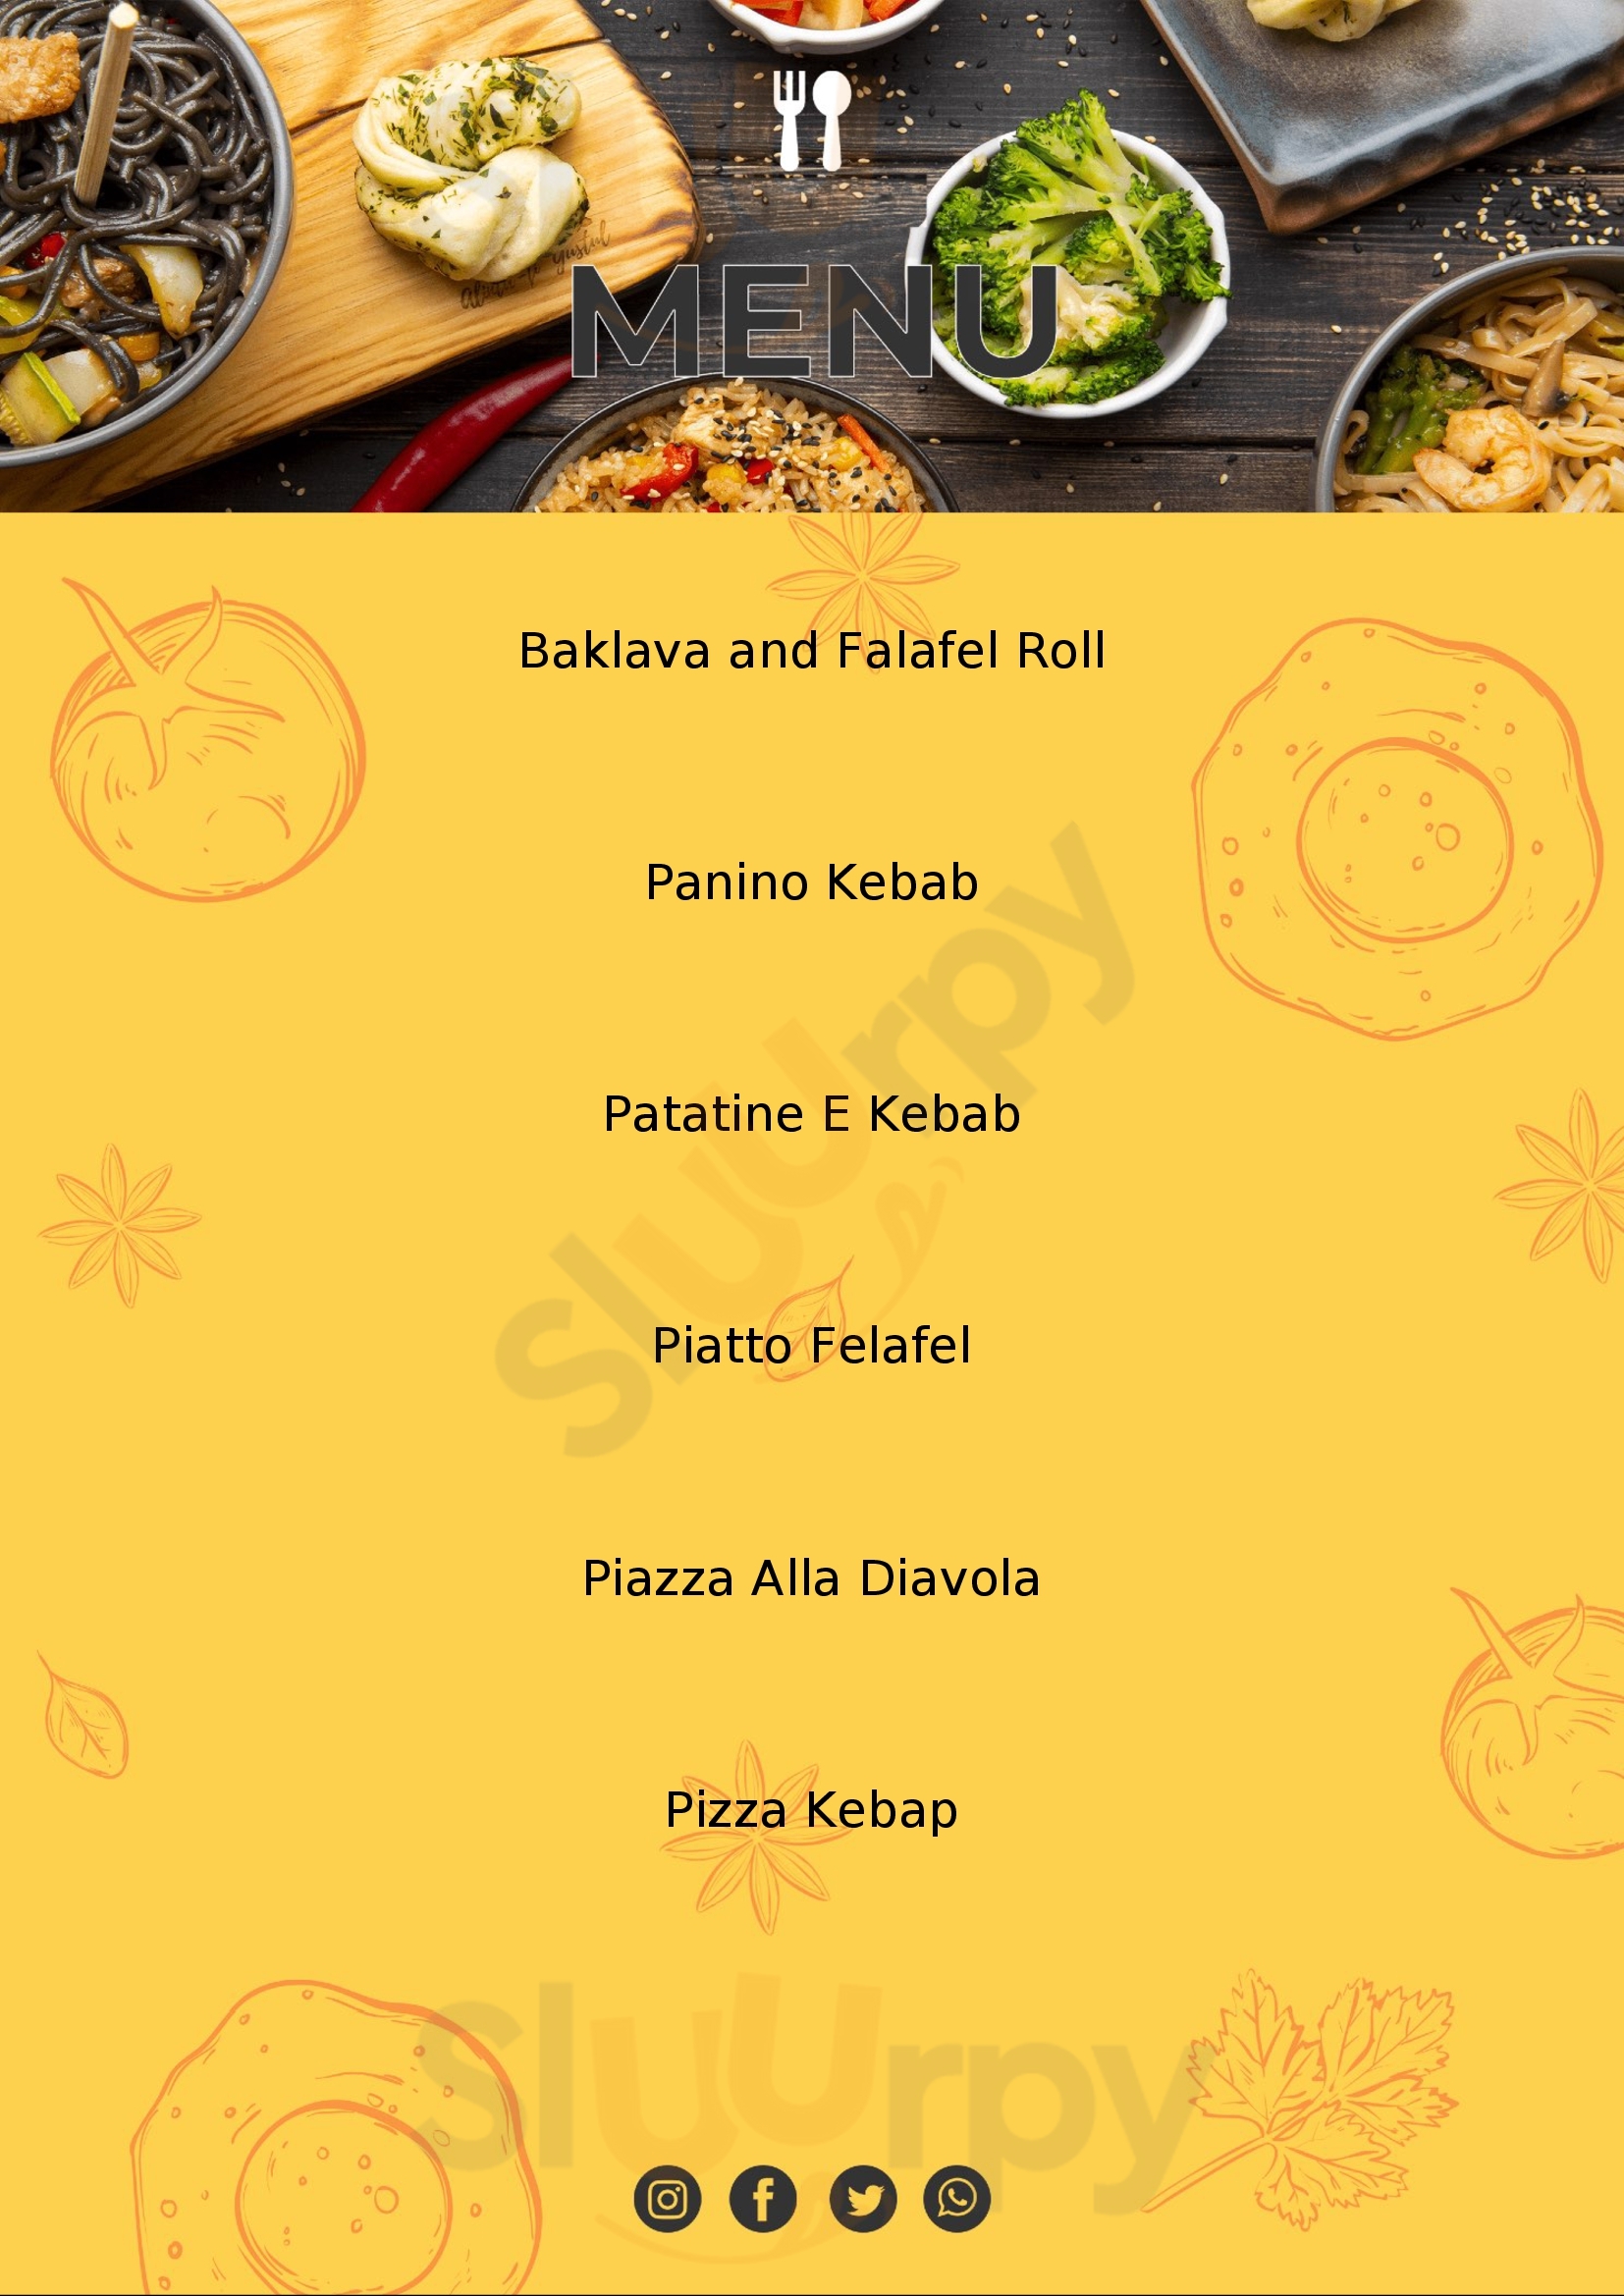 Efes Pizza Kebap Torino menù 1 pagina